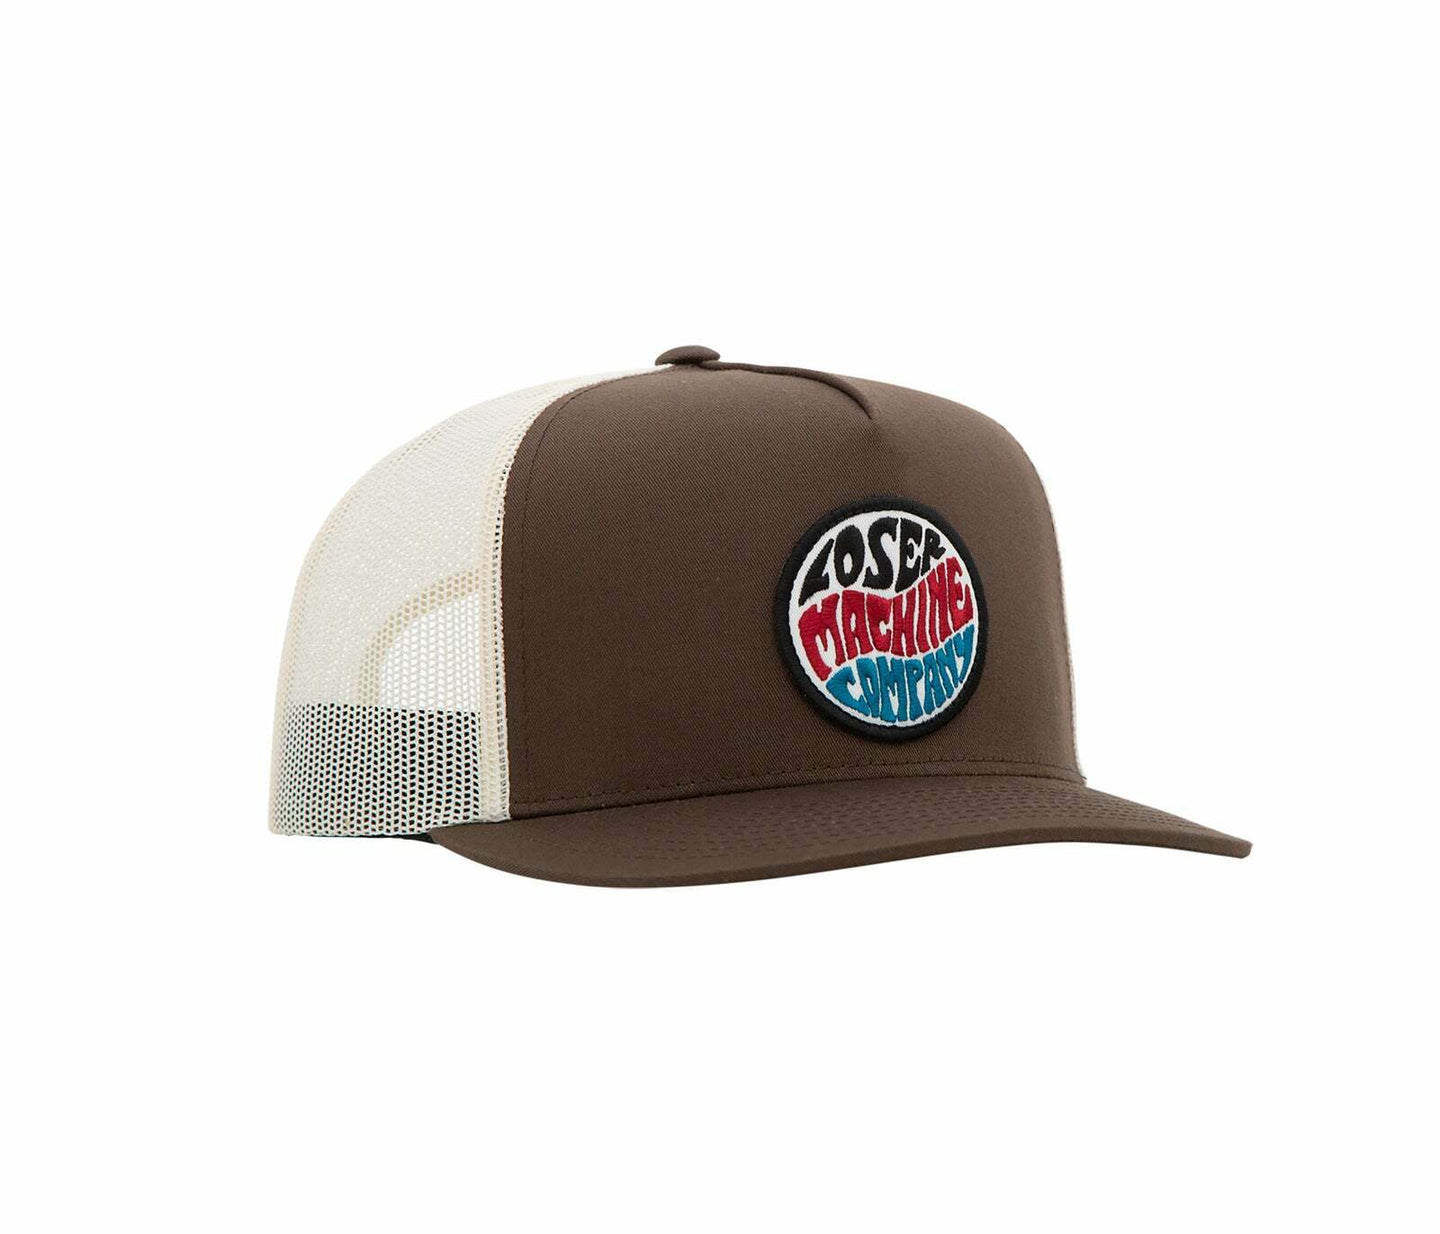 Loser Machine Wavy Trucker Hat Cap Snapback Brown